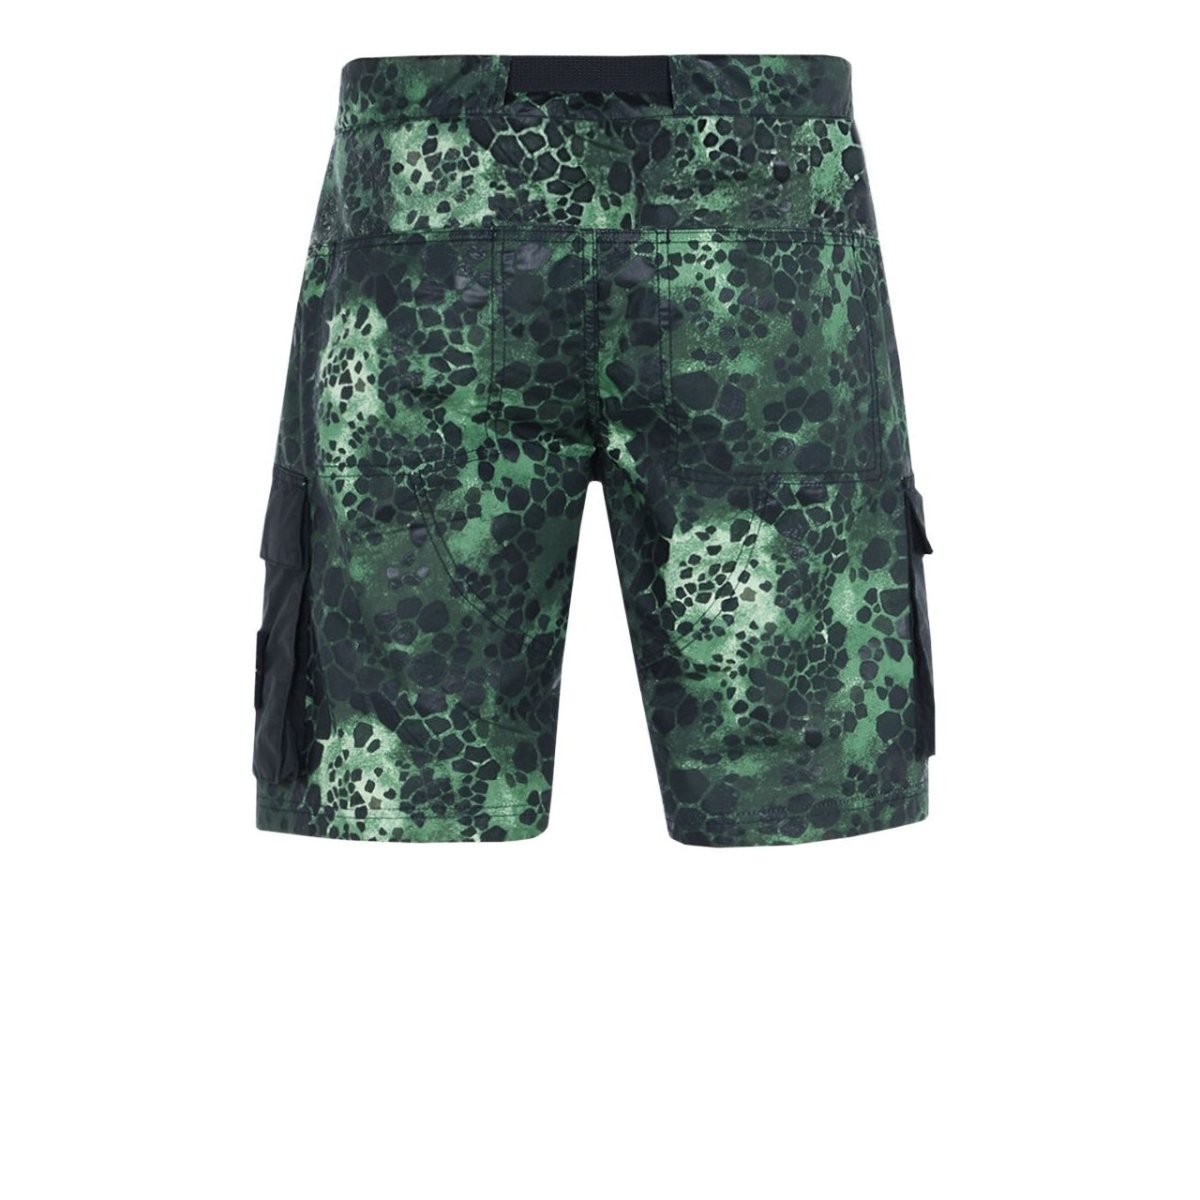 Stone Island Alligator Camo Cotton - Nylon Shorts (Grün)  - Allike Store